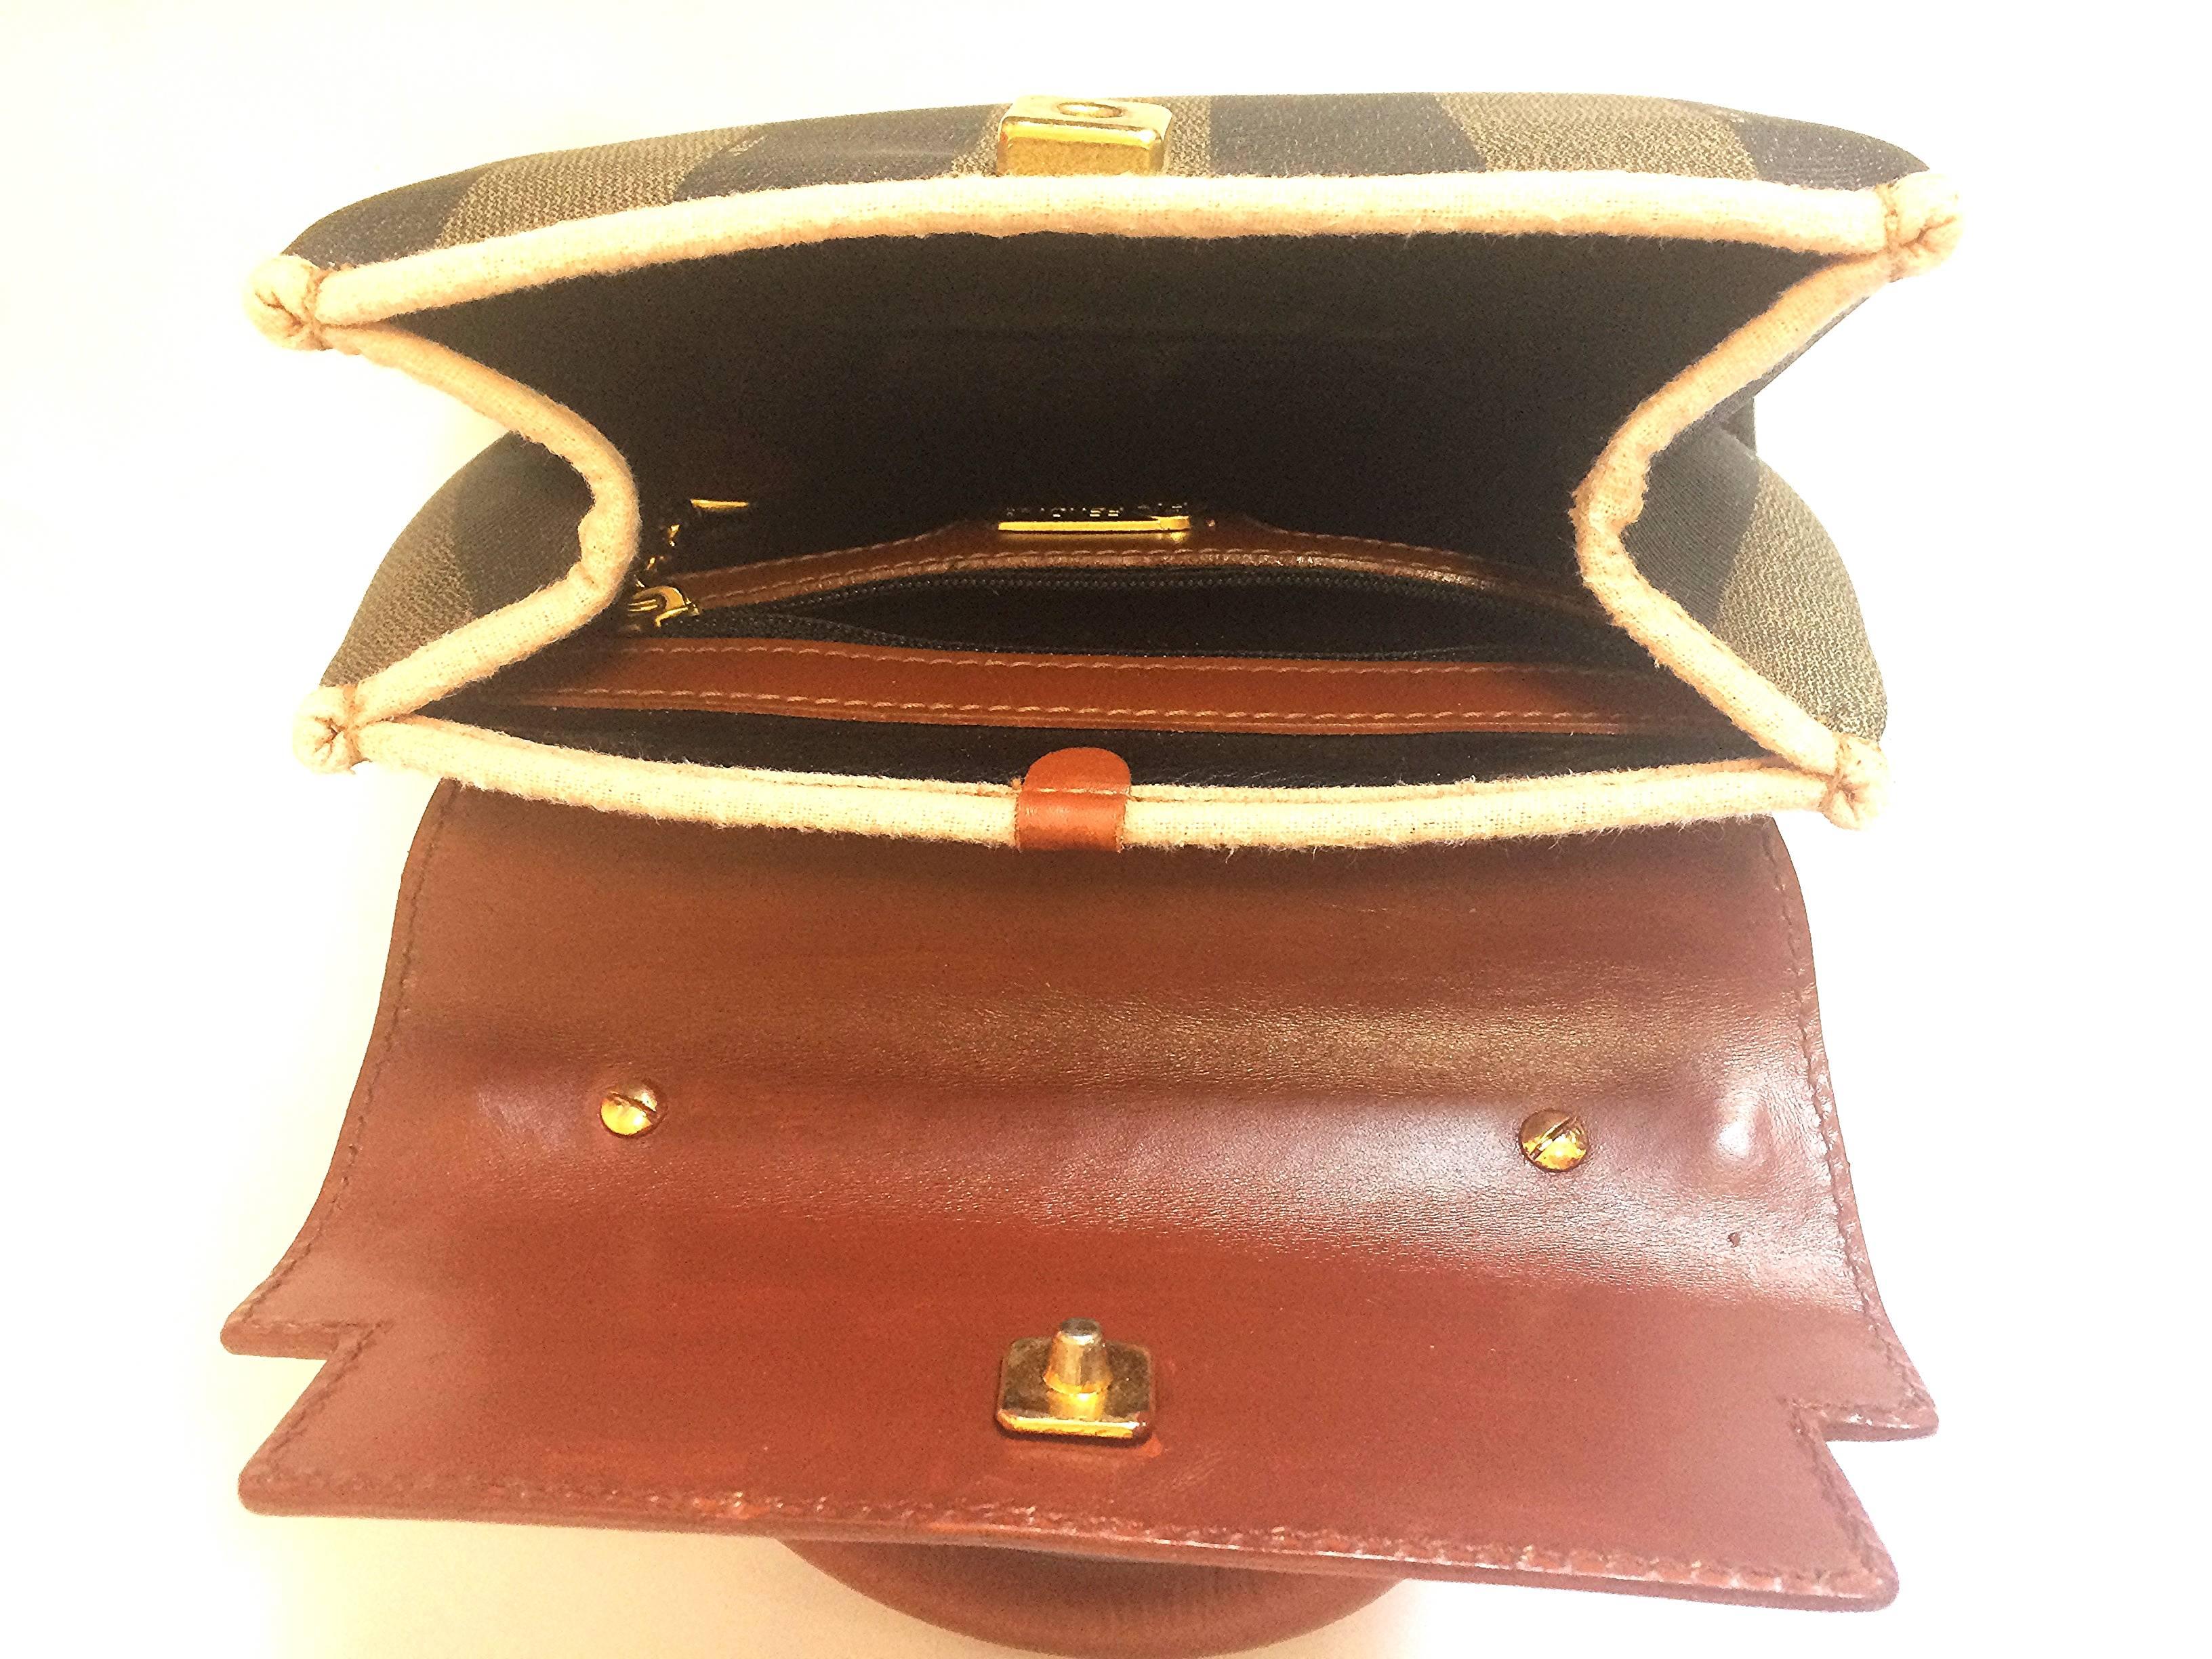 Vintage FENDI kelly bag style mini handbag in pecan stripes and brown leather 1